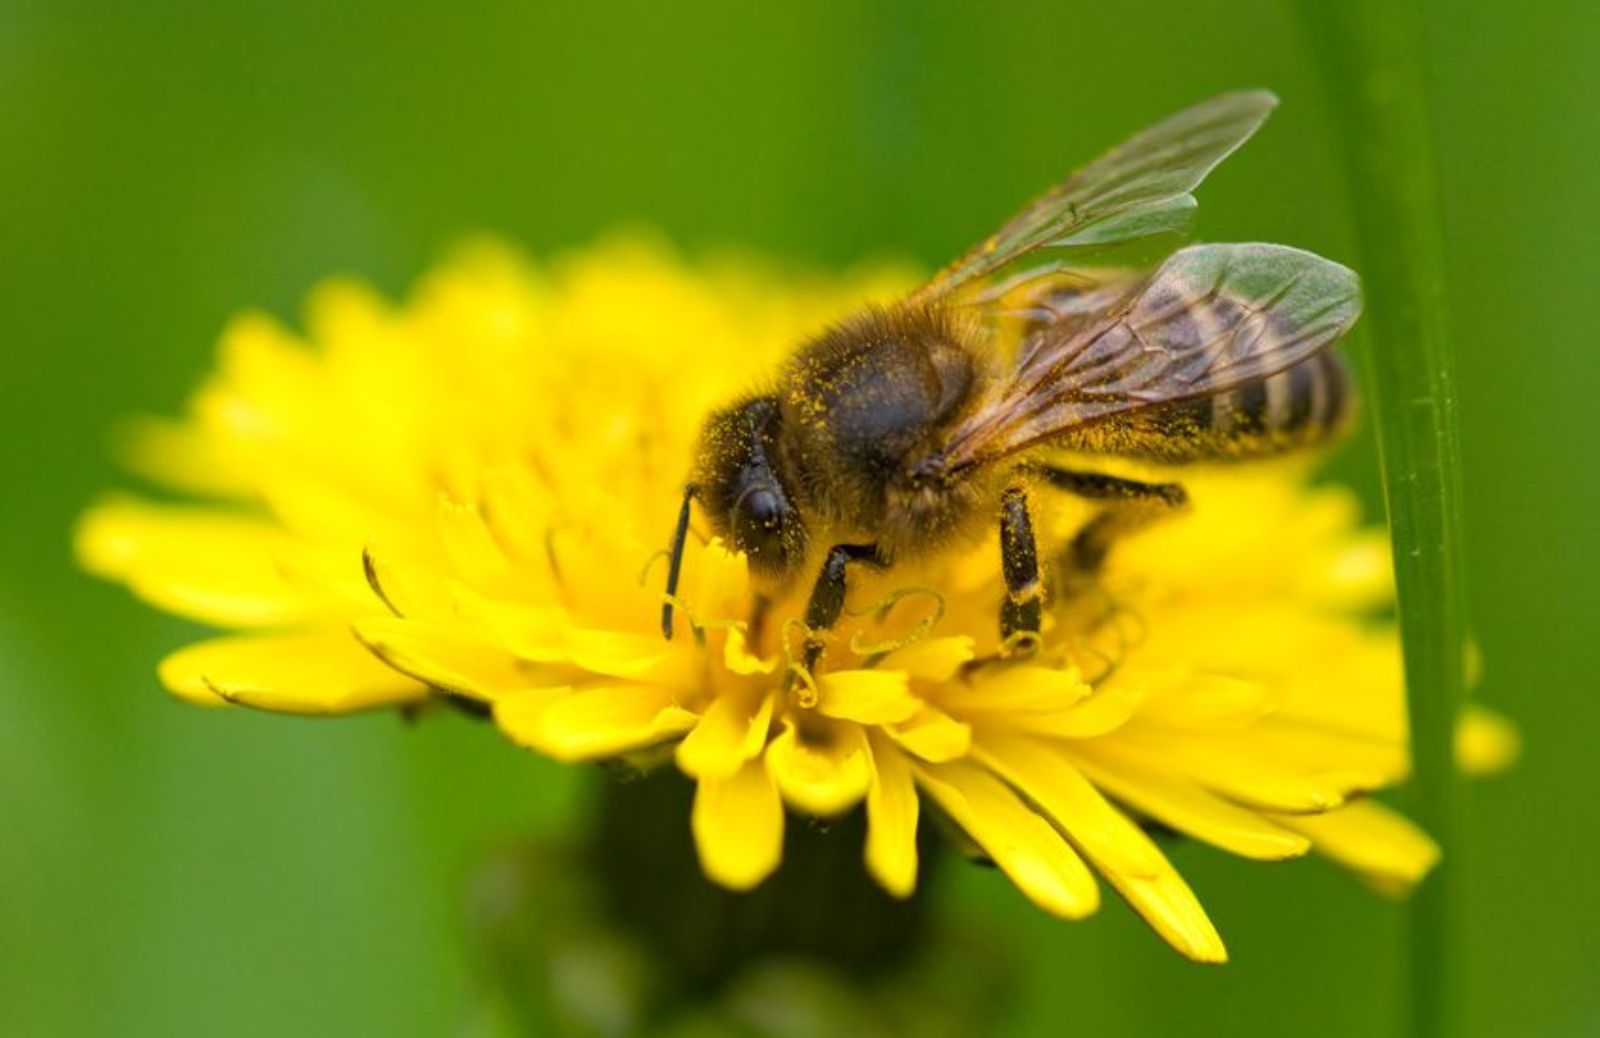 I 5 consigli per aiutare a salvare le api